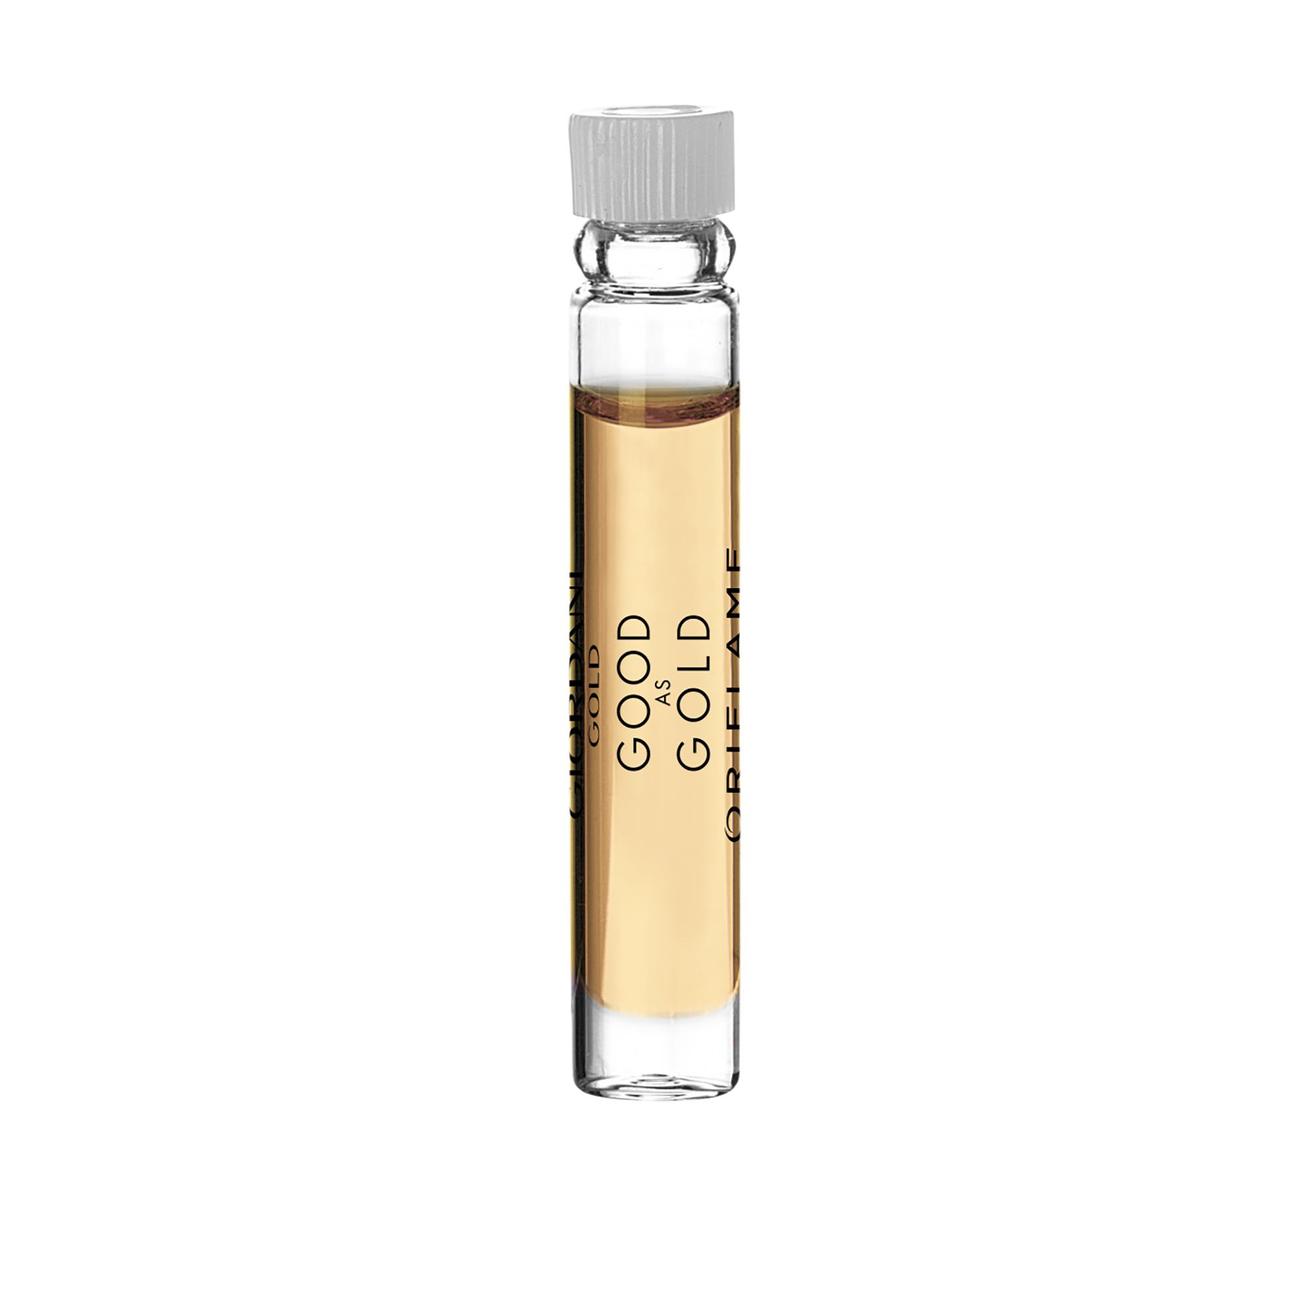 Oferta de Good as Gold Woman Eau de Parfum - VIAL por $320 en Oriflame